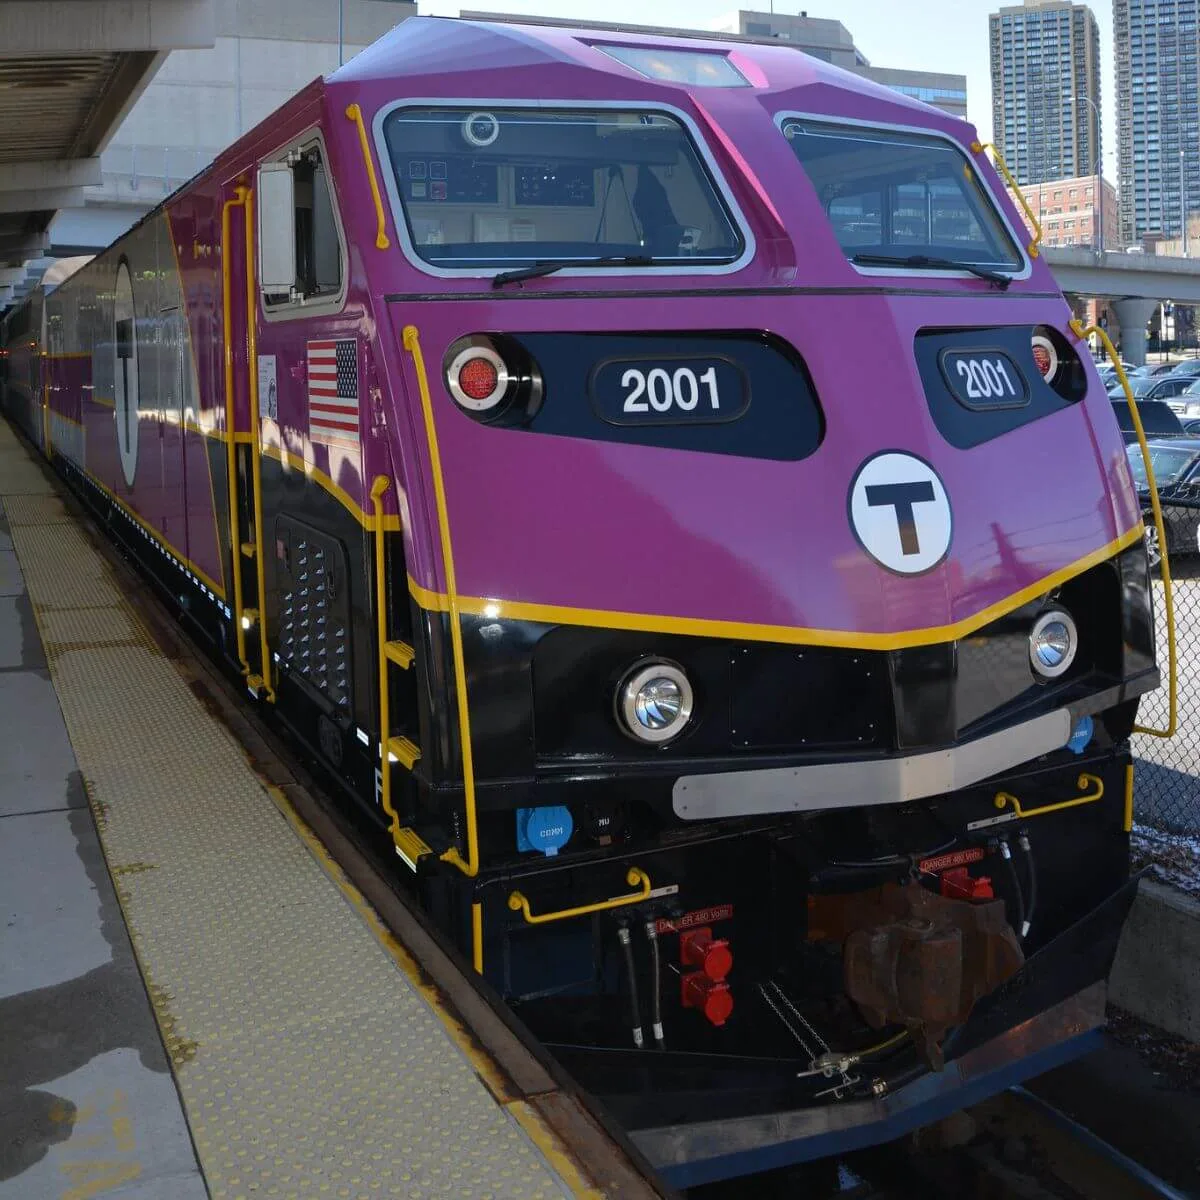 Photo of a shiny new MBTA commuter rail train, the same organization that provides the CapeFLYER train service.